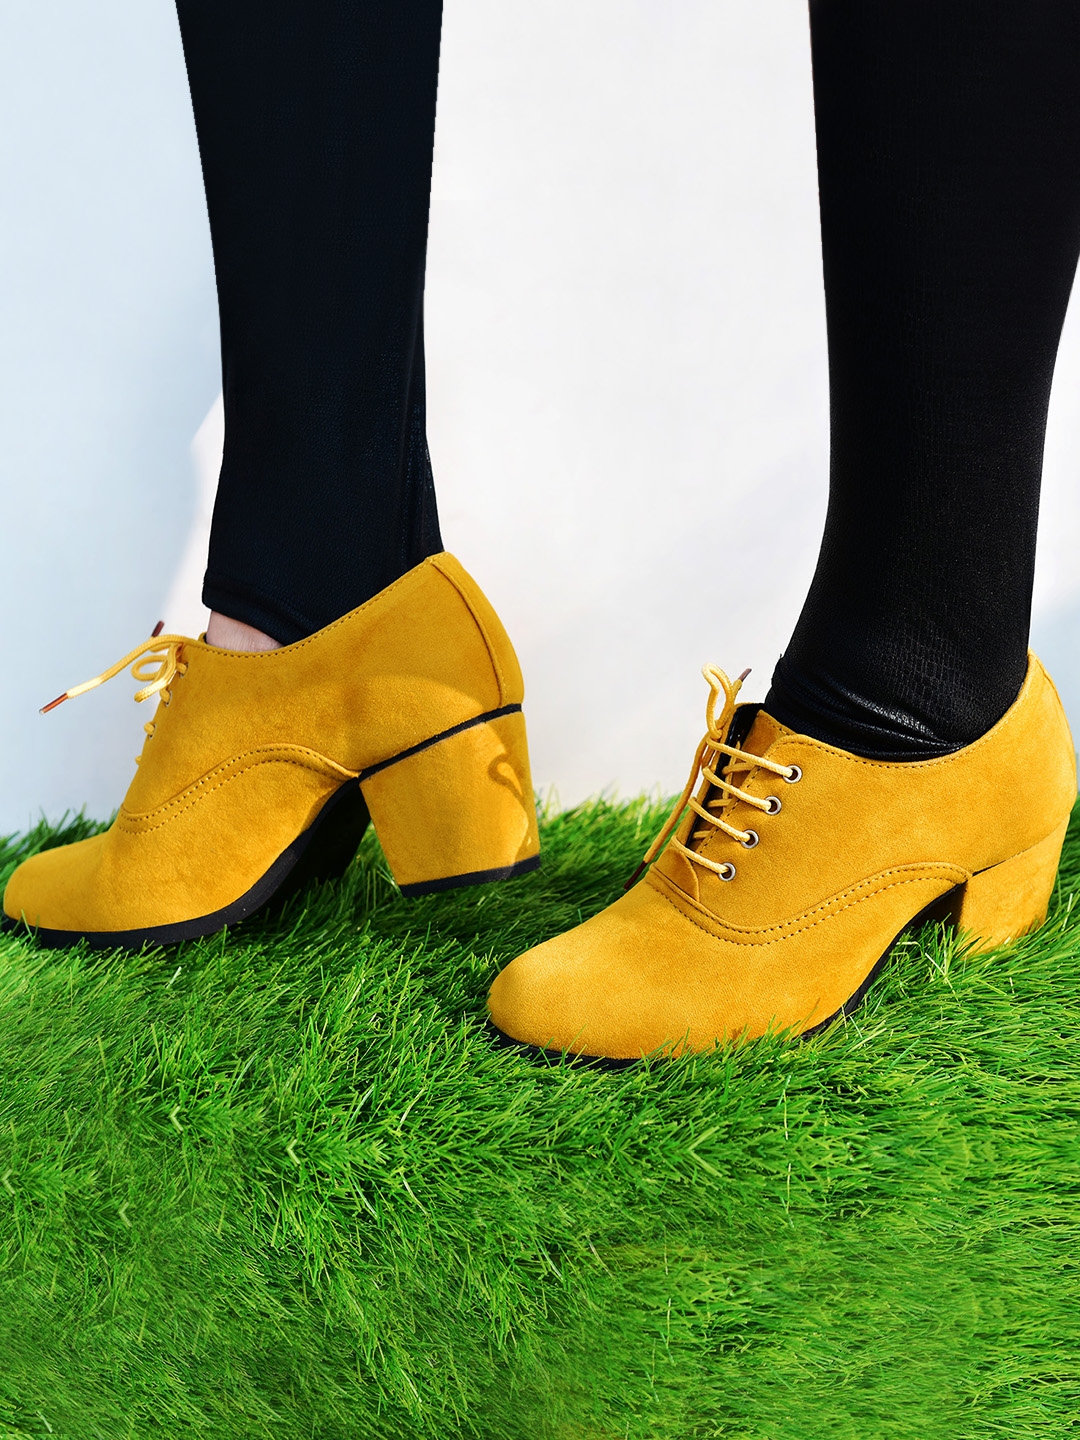 womens mustard yellow boots